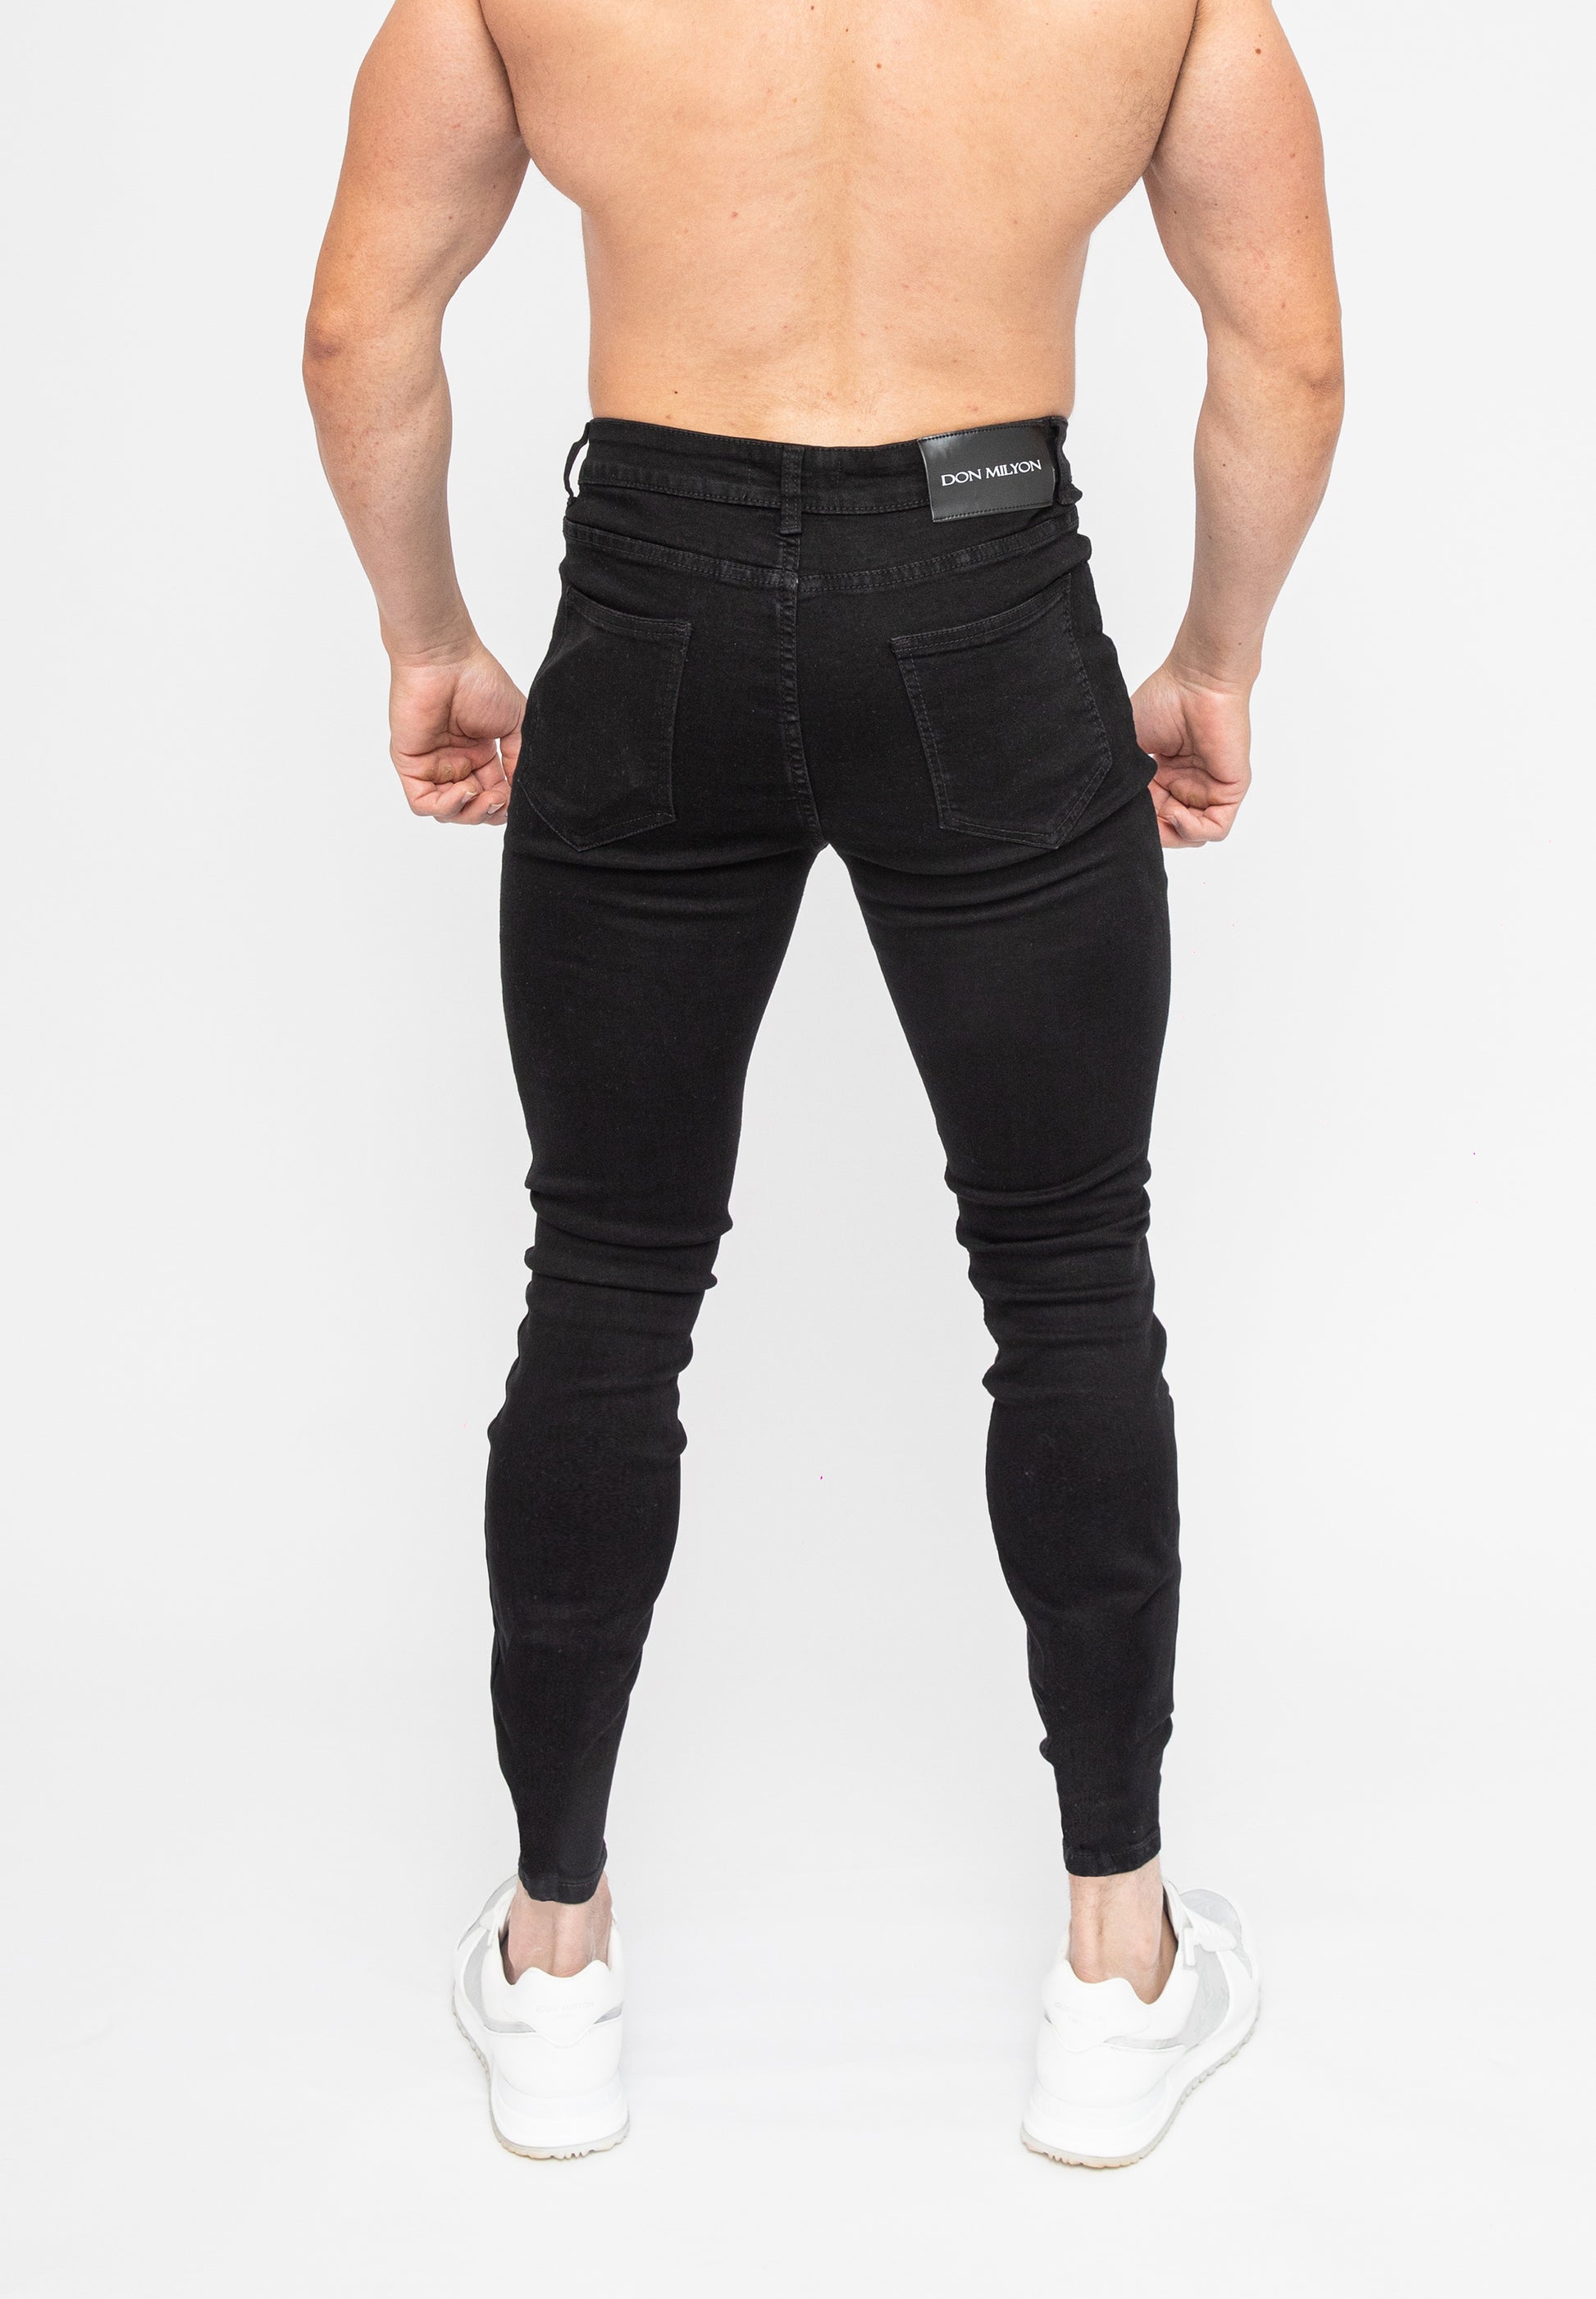 Black Ripped Jeans - Ultra Slim Stretch Fit